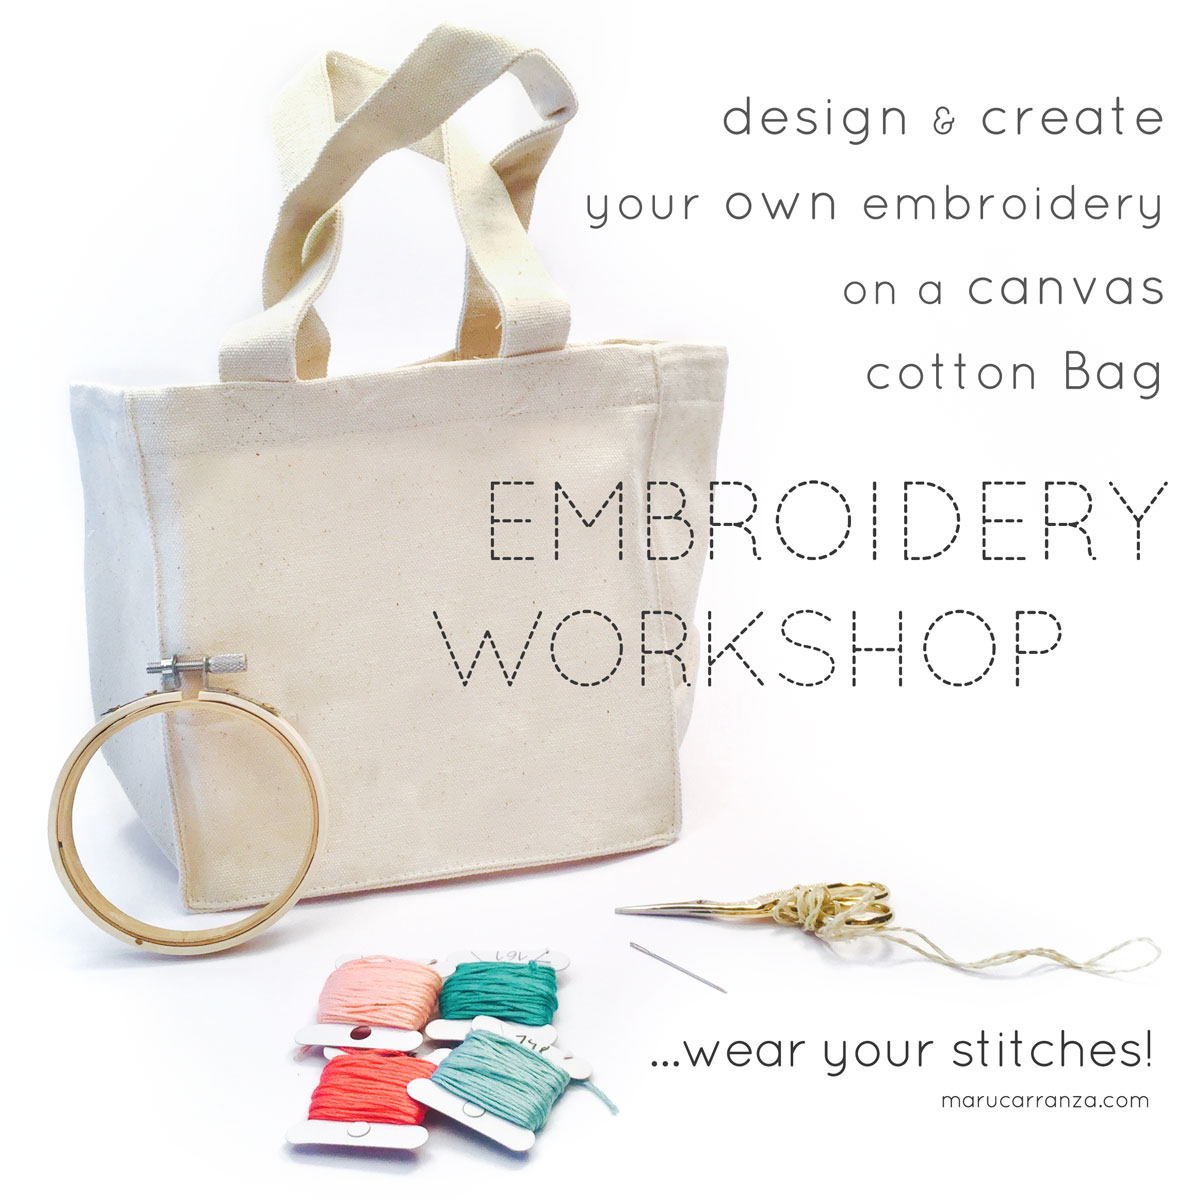 wear-your-stitches-flyer-bag-cotton-canvas-workshop-embroidery-marucarranza-berlin-02- תל אביב רקמה -